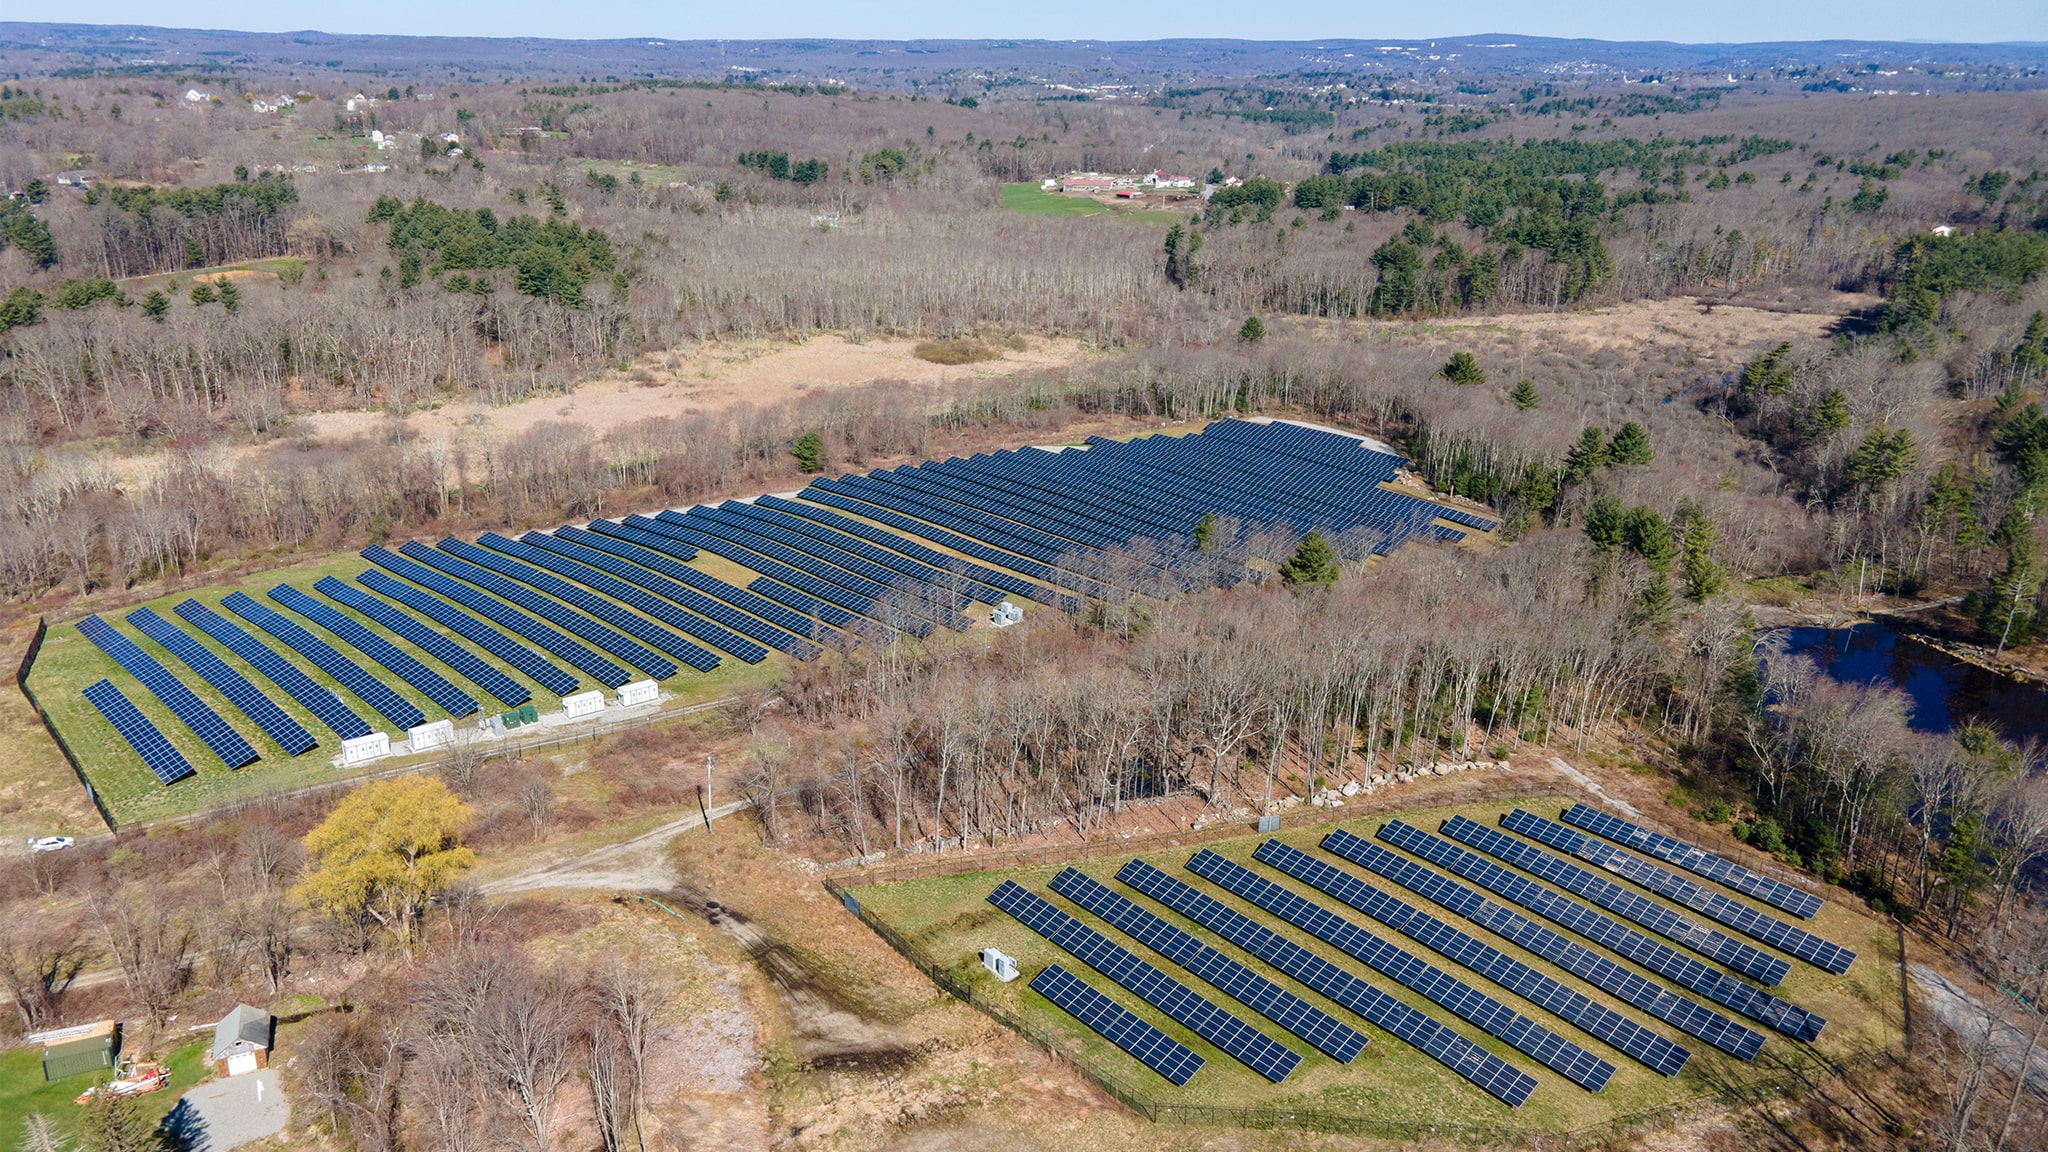 Millbury - Syncarpha Capital - Community Solar Gardens Project - Millbury, Massachusetts - 2